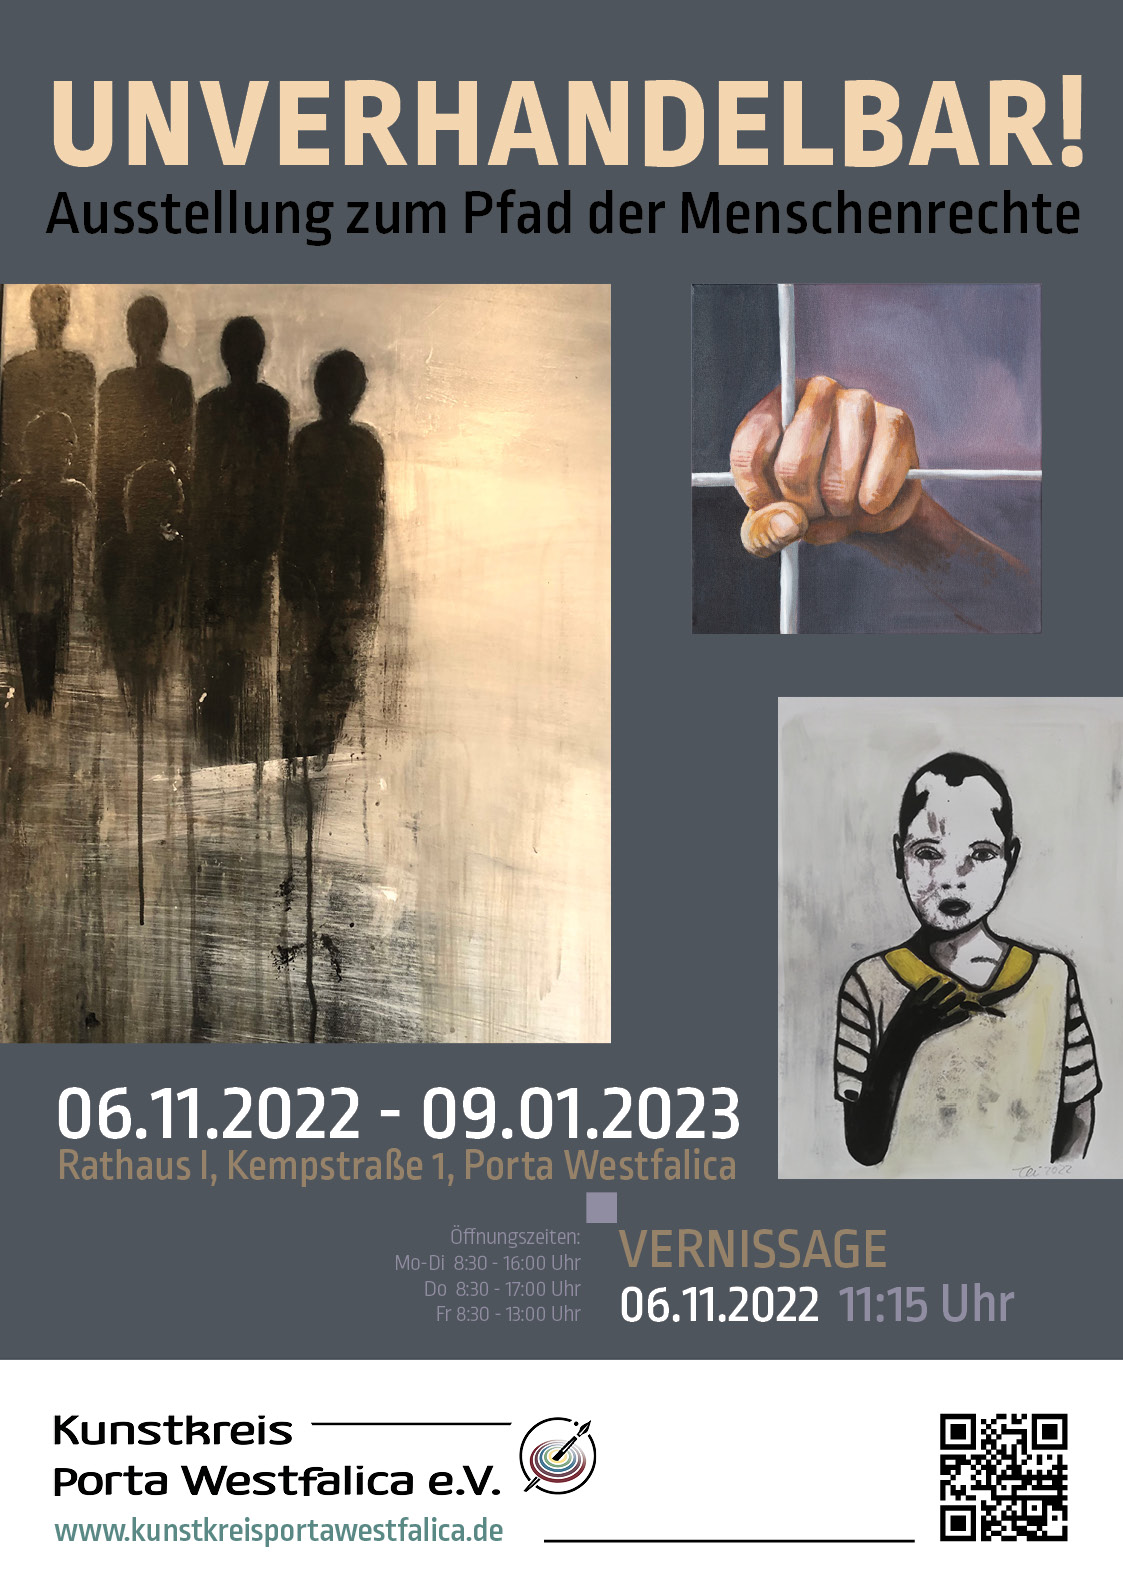 Kunstkreis Plakat unverhandelbar 2022